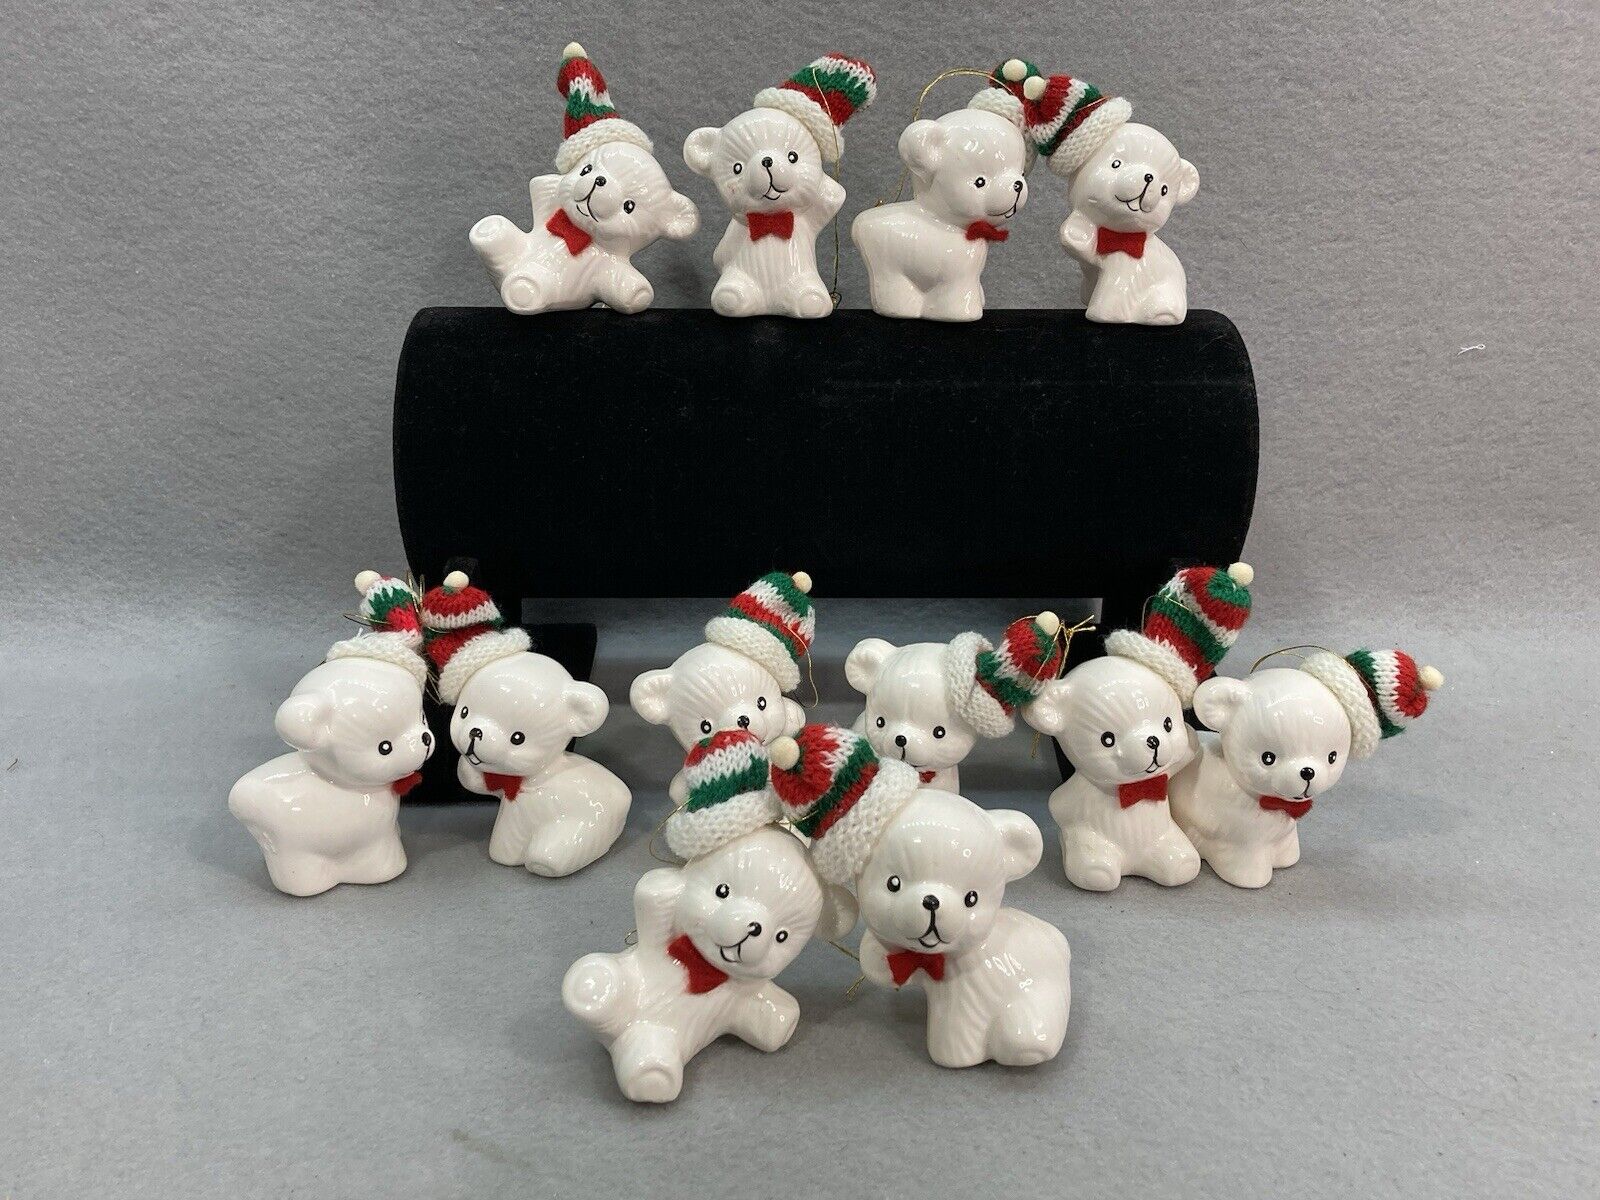 Vintage Christmas White Porcelain Teddy Bear Ornaments Fig Knit Hat 4” Lot of 12